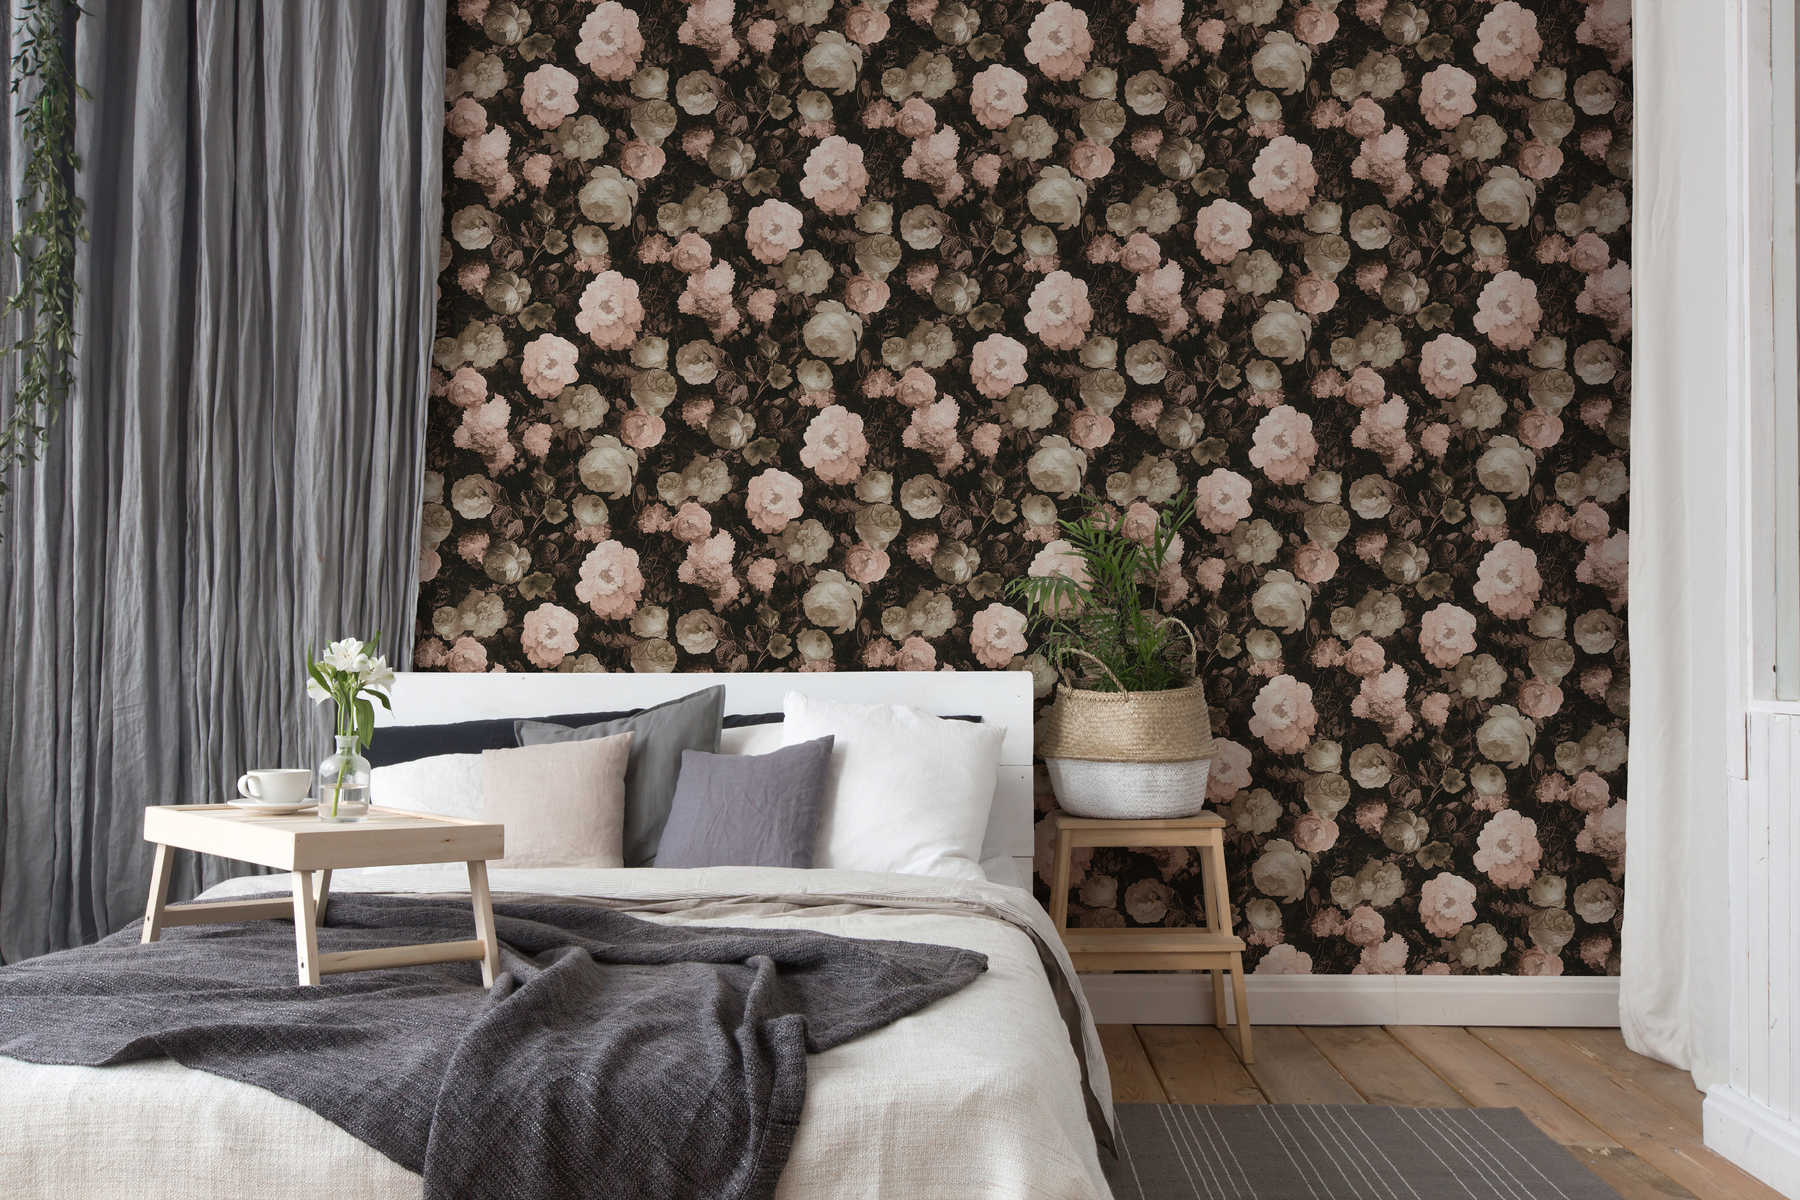             Motif wallpaper rose blossoms, shrub roses - pink, red, grey
        